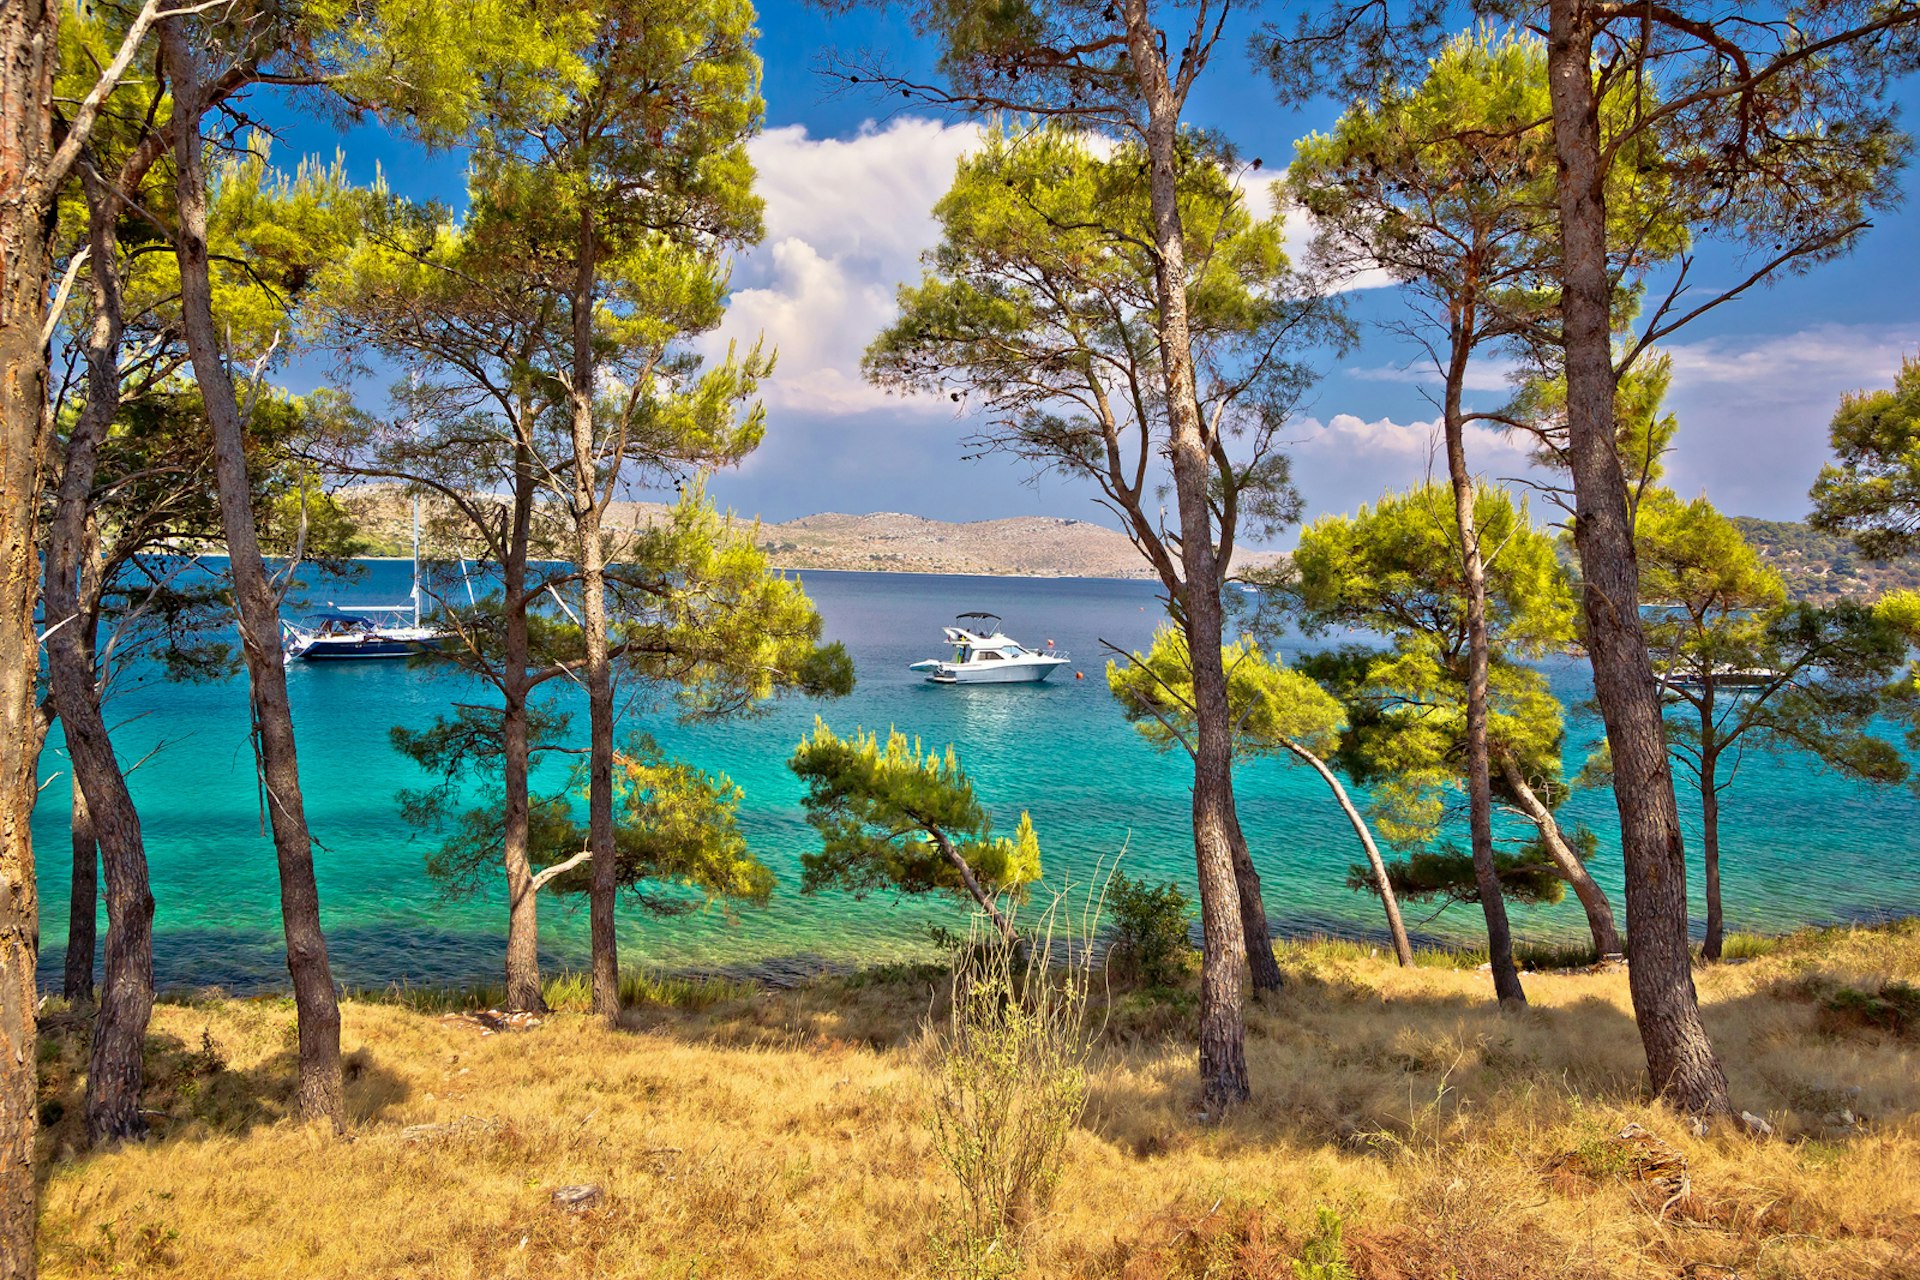 Trees and boats in Nature Park Telašćica, yachting destination of Dugi Otok island, Dalmatia, Croatia